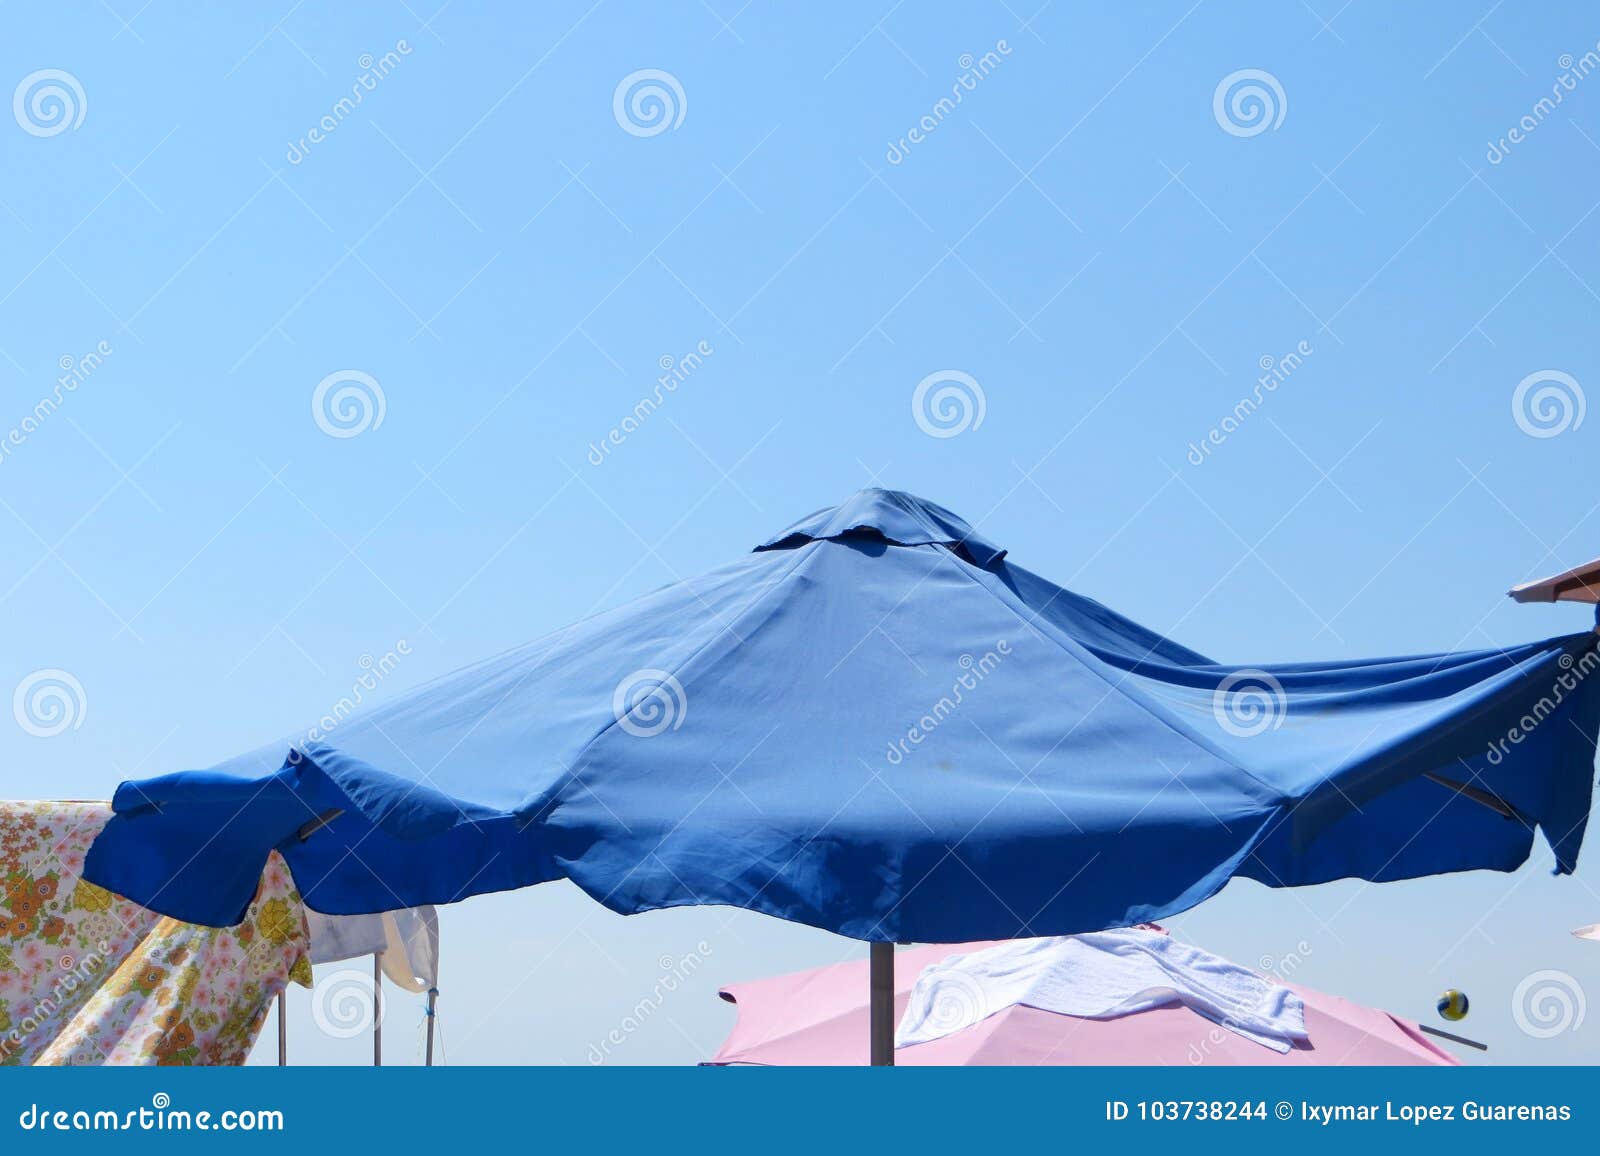 blue umbrella in a sunny beach day